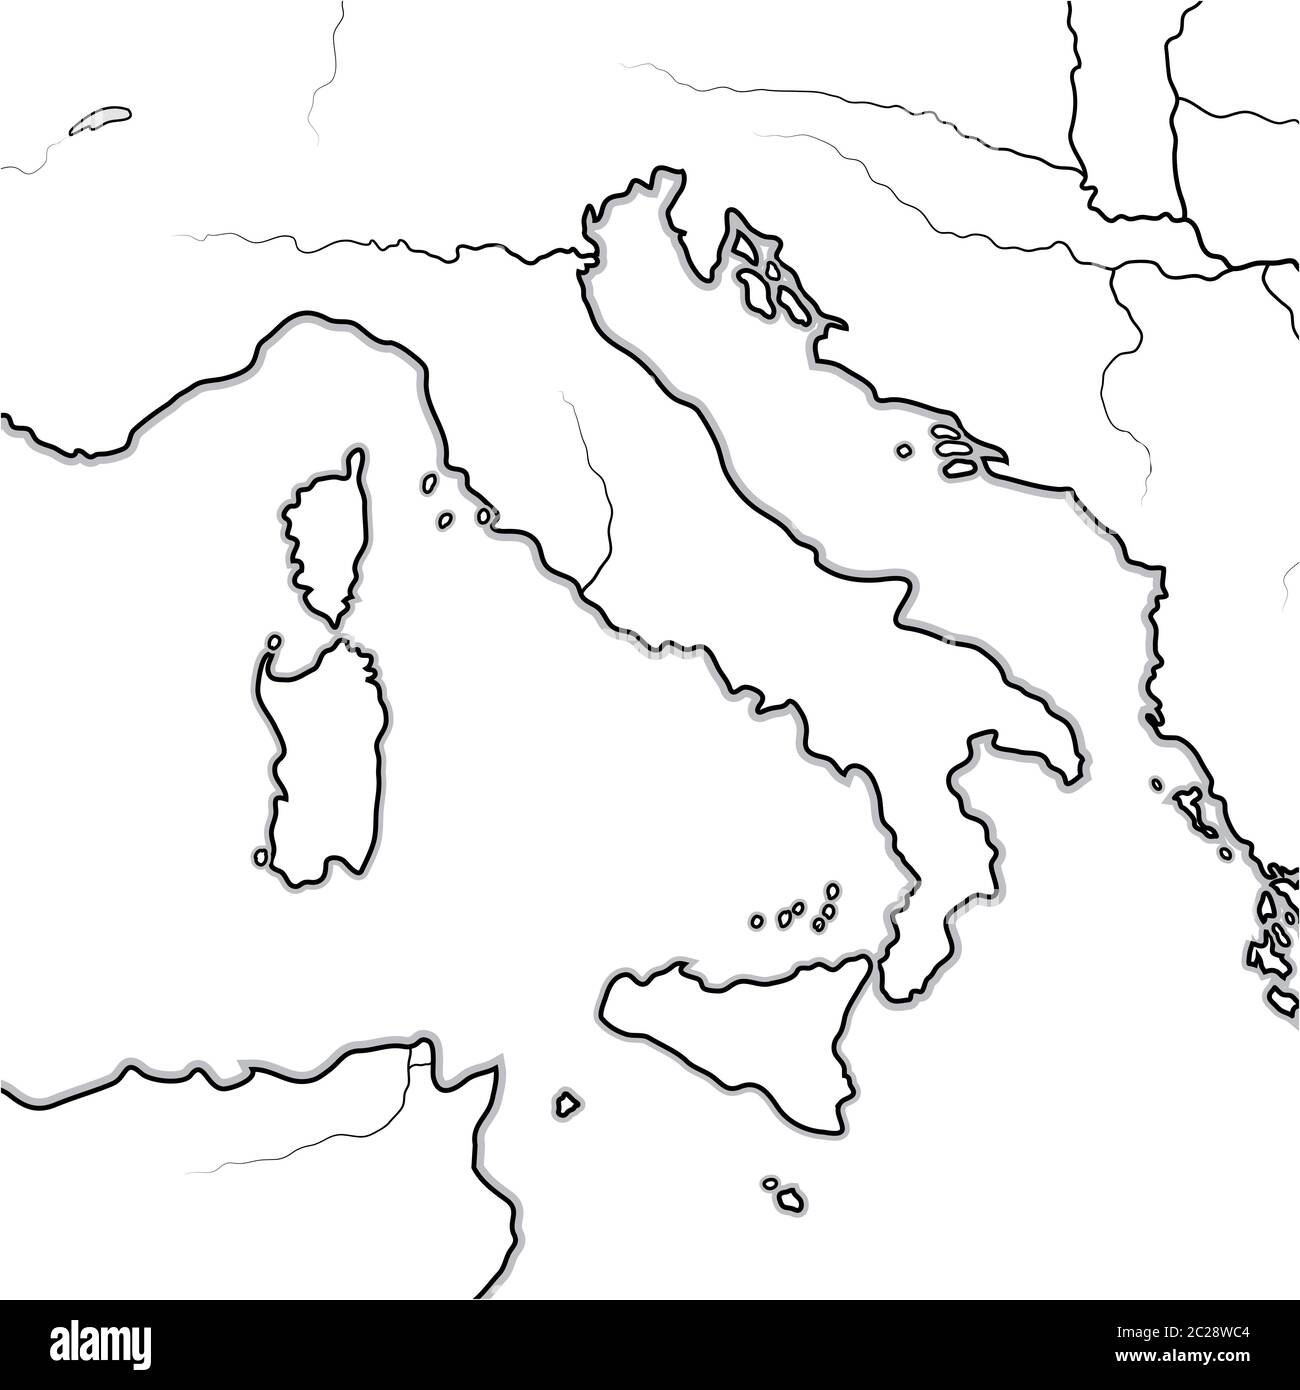 Map of The ITALIAN Lands: Italy, Tuscany, Lombardy, Sicily, The Apennines, Italian Peninsula. Geographic chart. Stock Photo